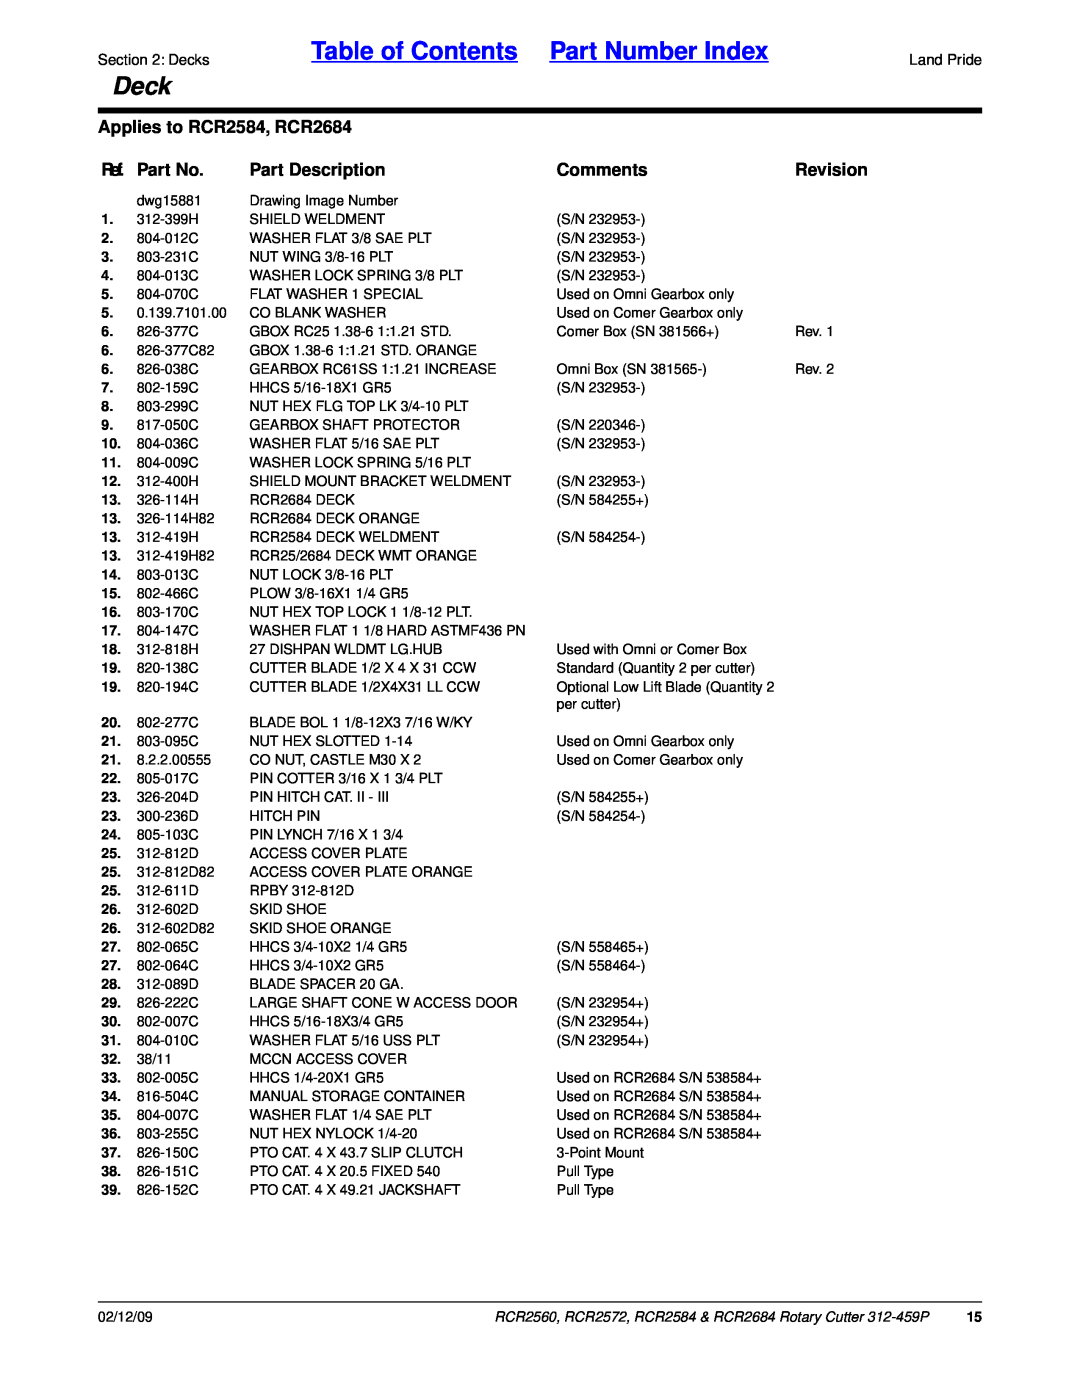 Land Pride RCR2560 Table of Contents Part Number Index, Deck, Applies to RCR2584, RCR2684, Ref. Part No, Part Description 